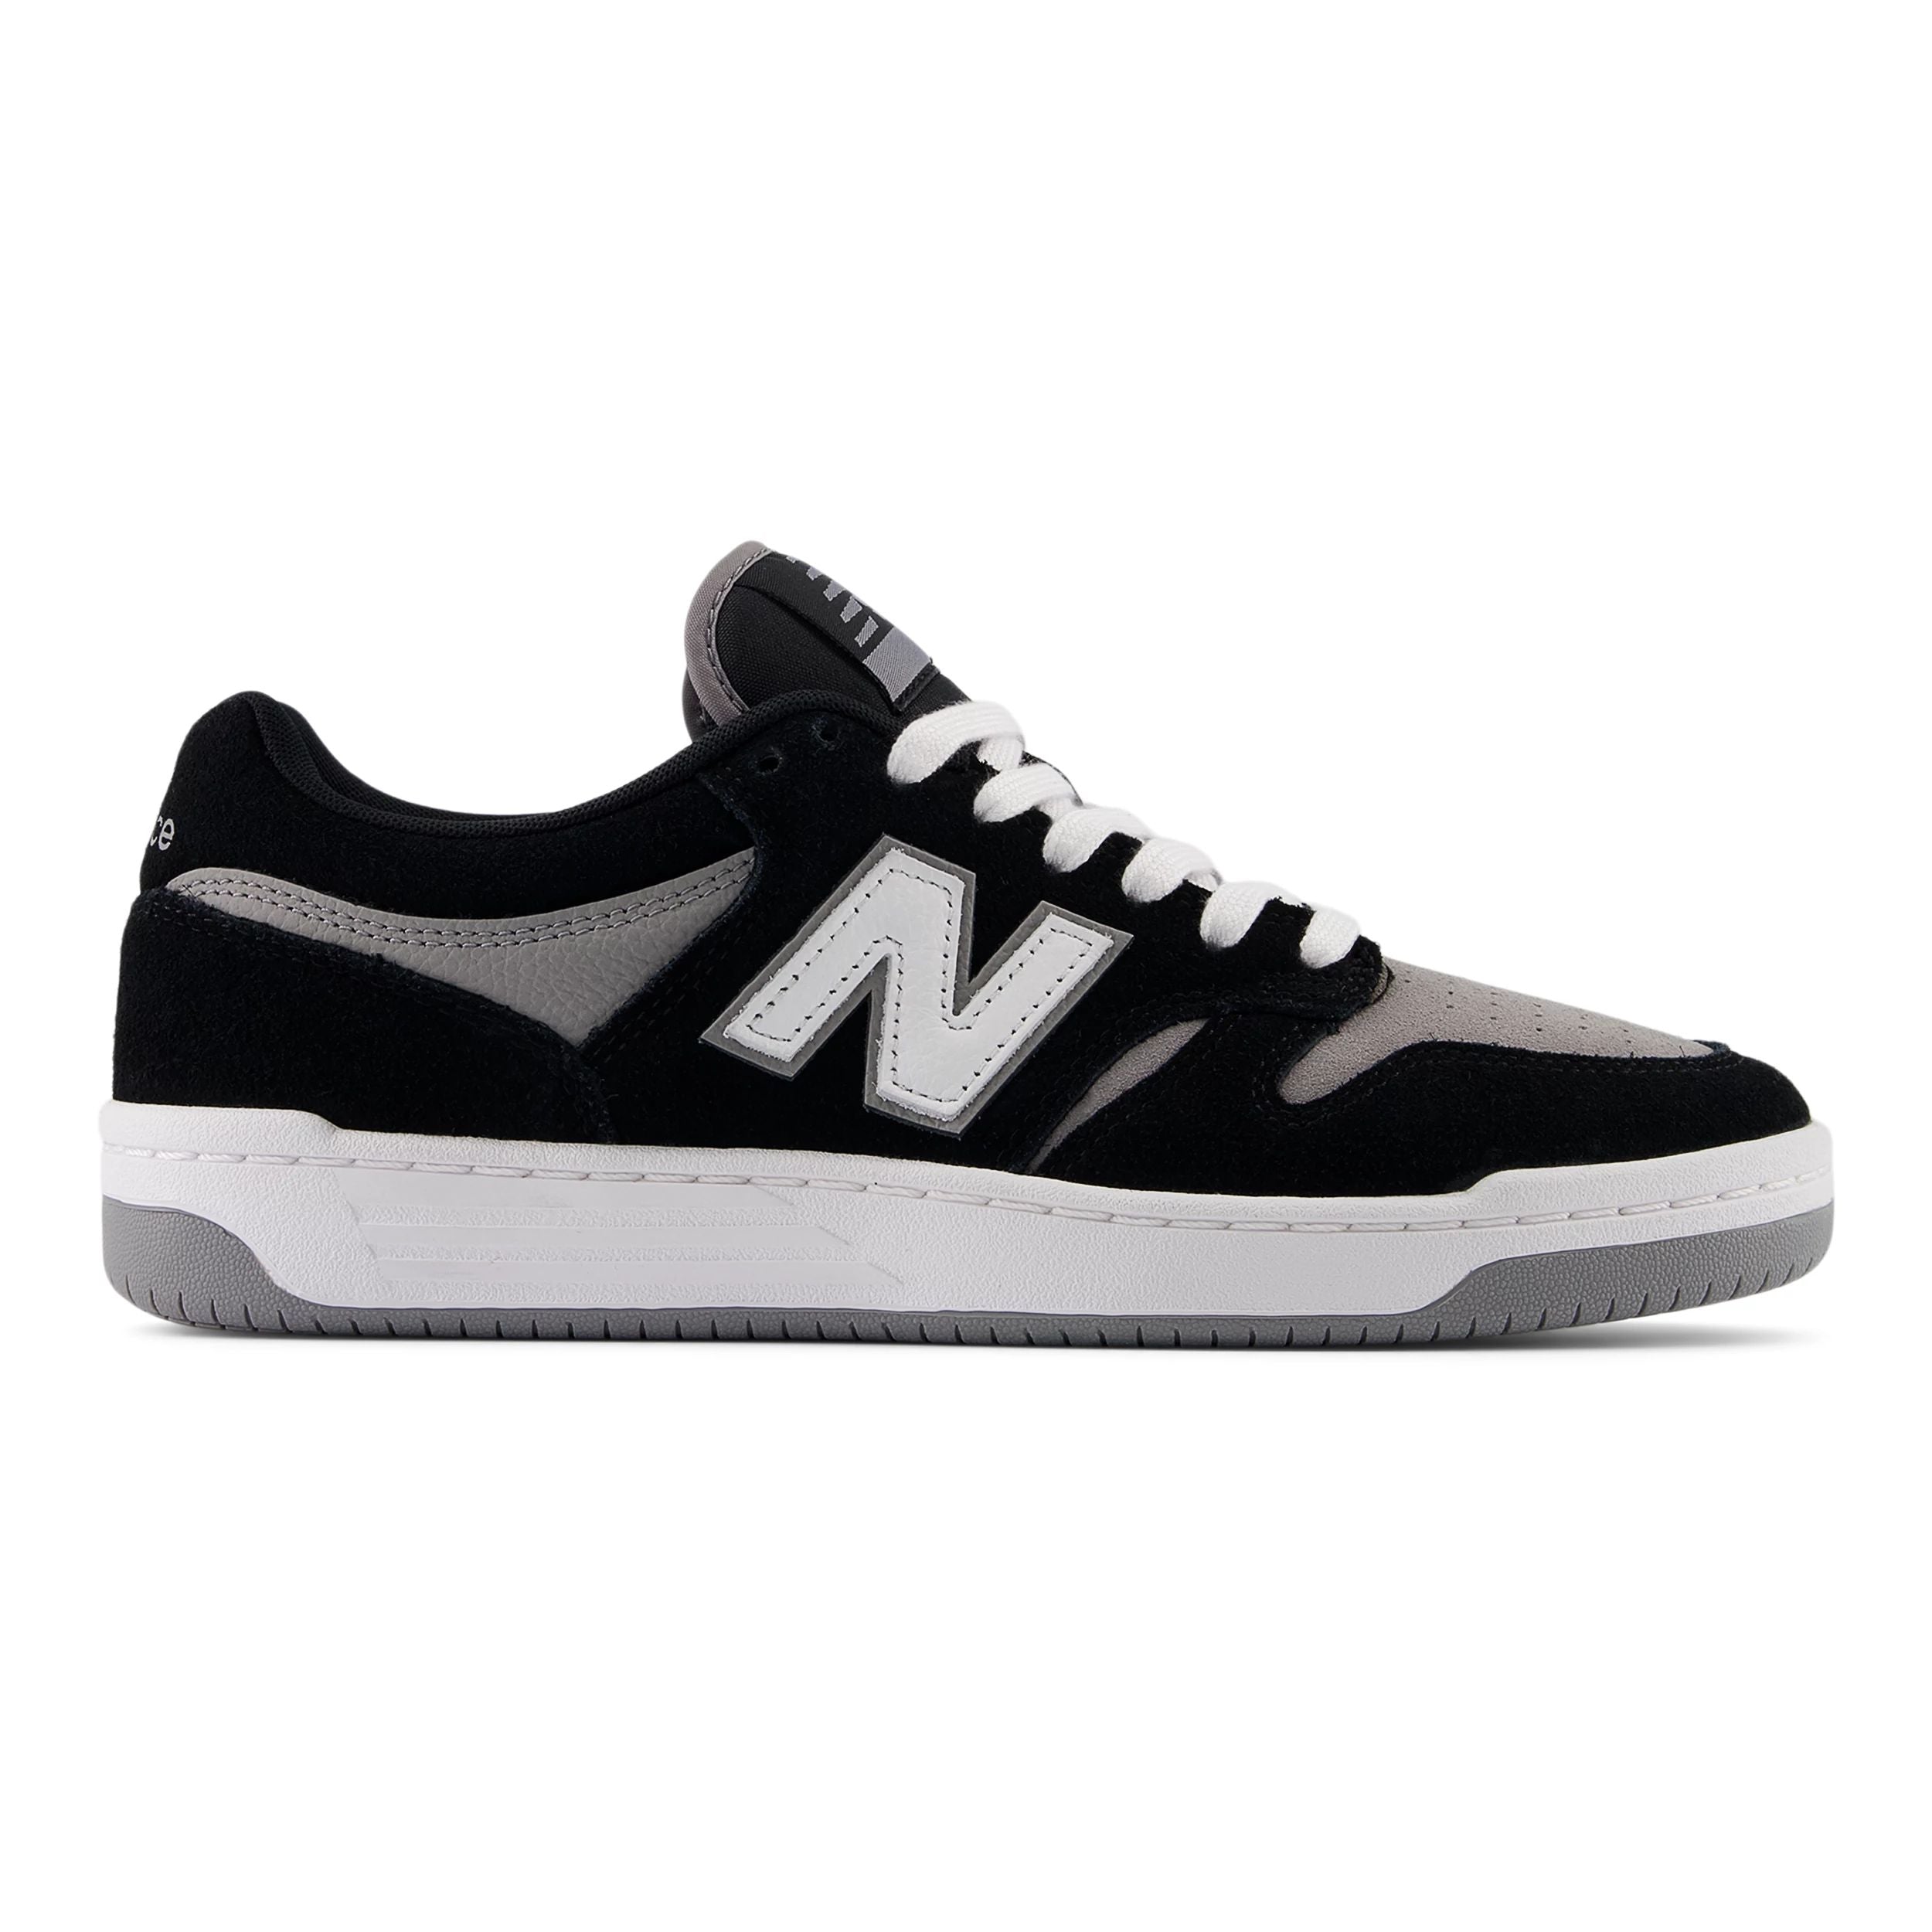 Black/Grey 480 NB Numeric Skateboard Shoe